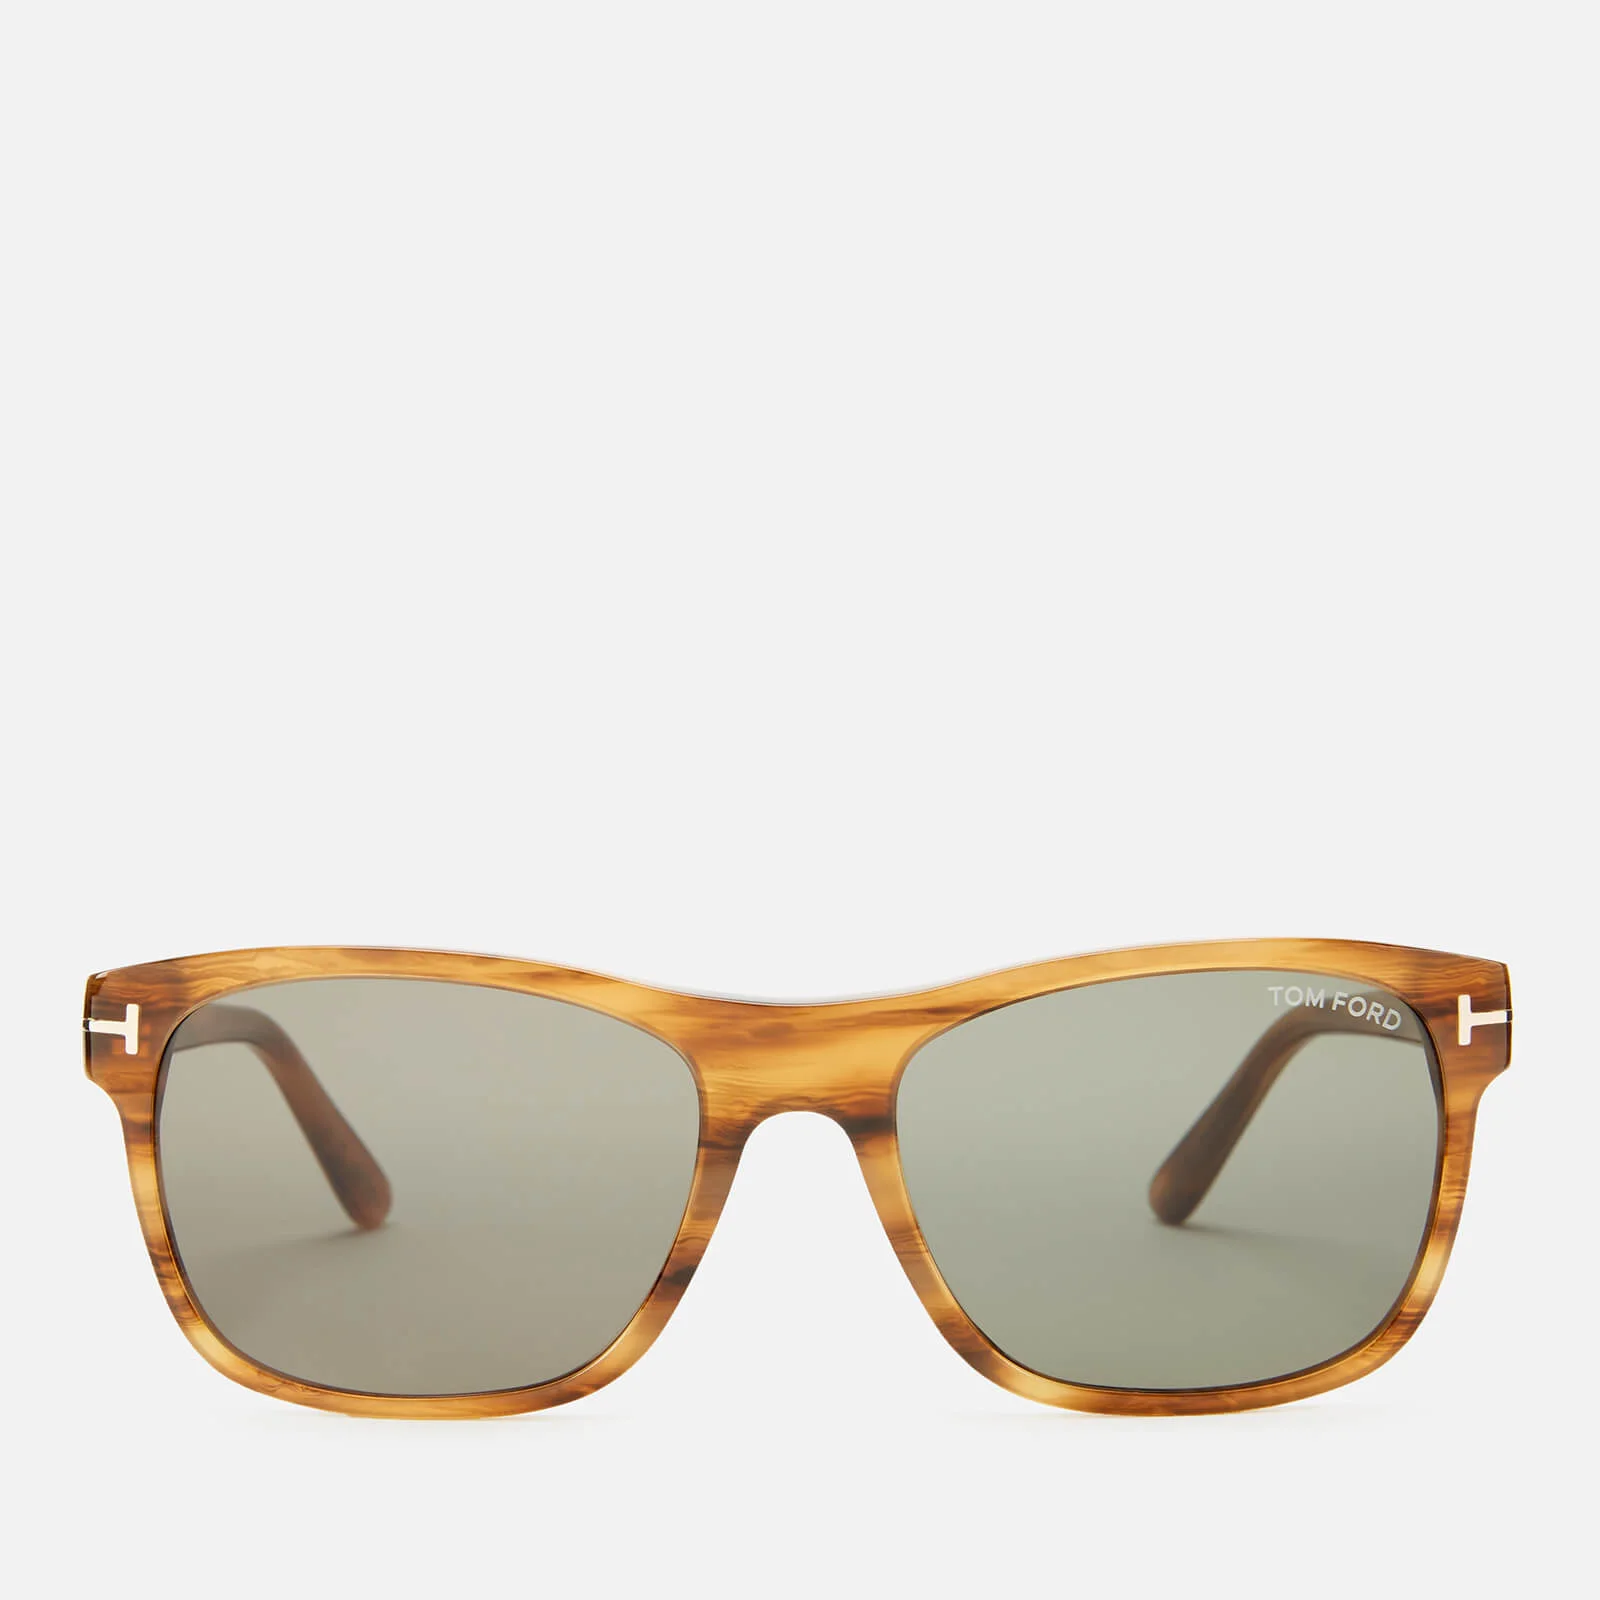 Tom Ford Men's Guilio Sunglasses - Dark Brown/Green Image 1